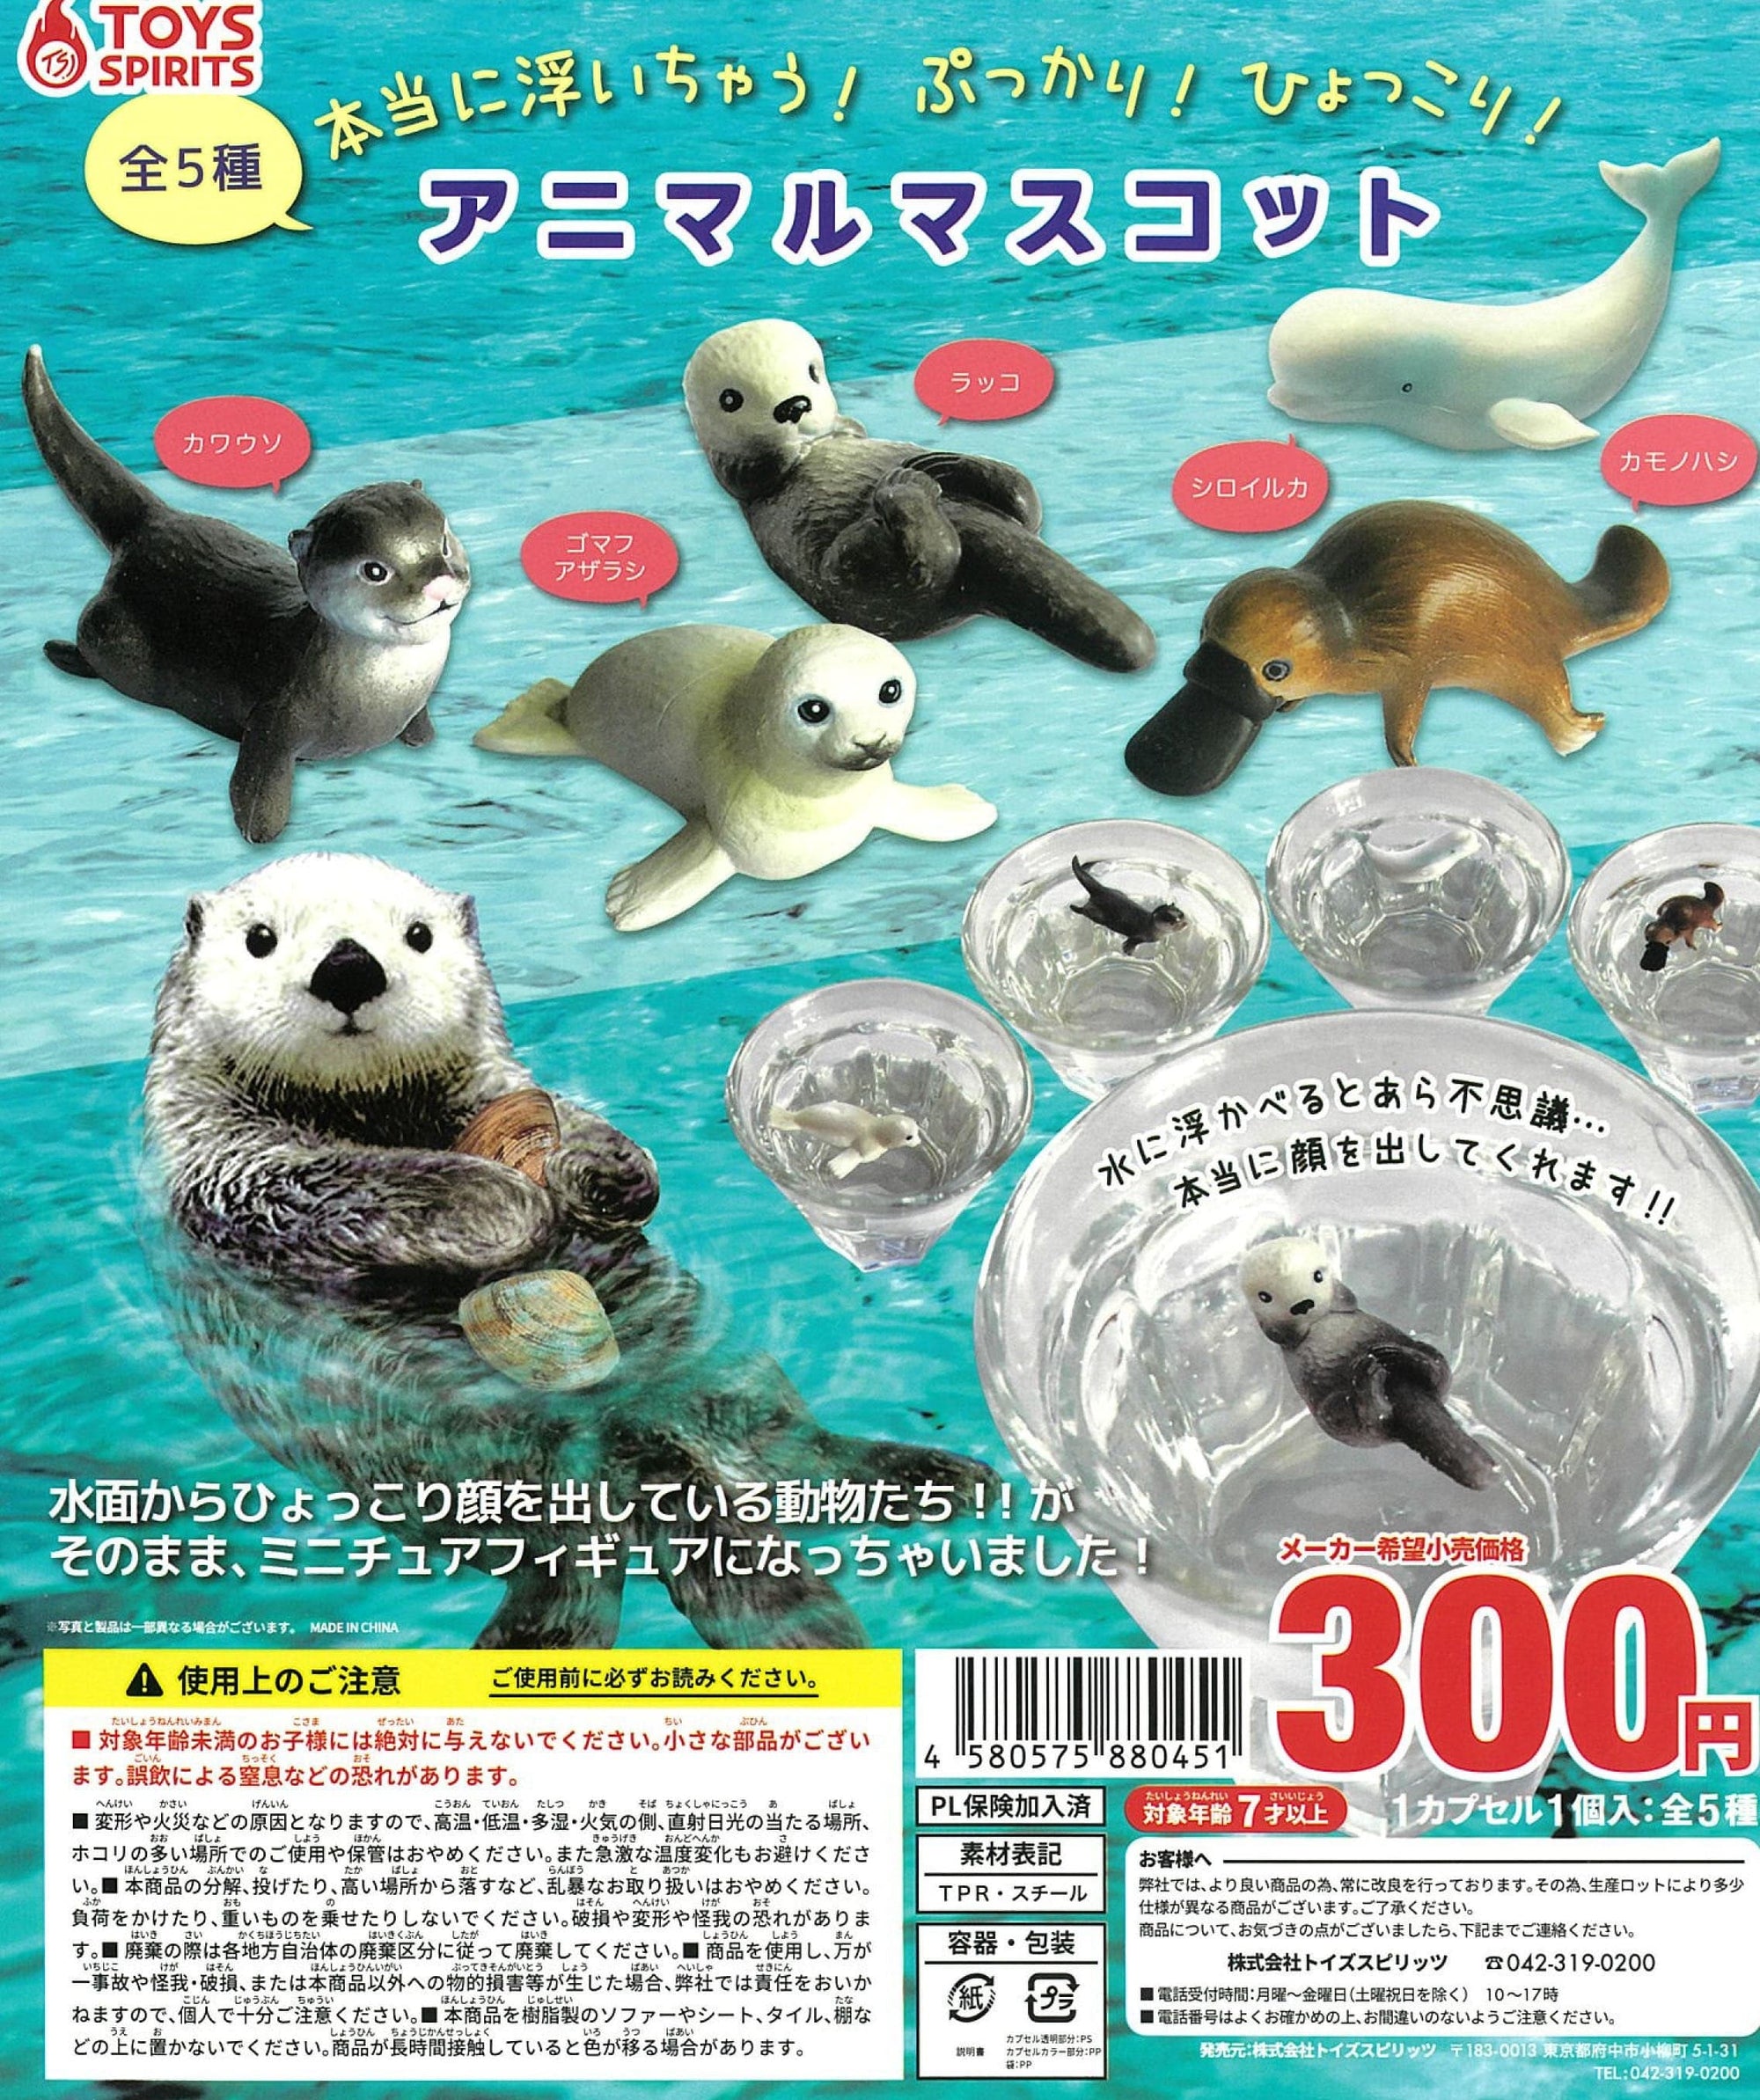 TOYS SPIRITS CP0352 - Hontouni! Uichau! Pukkari! Hyokkori! Animal Mascot - Complete Set